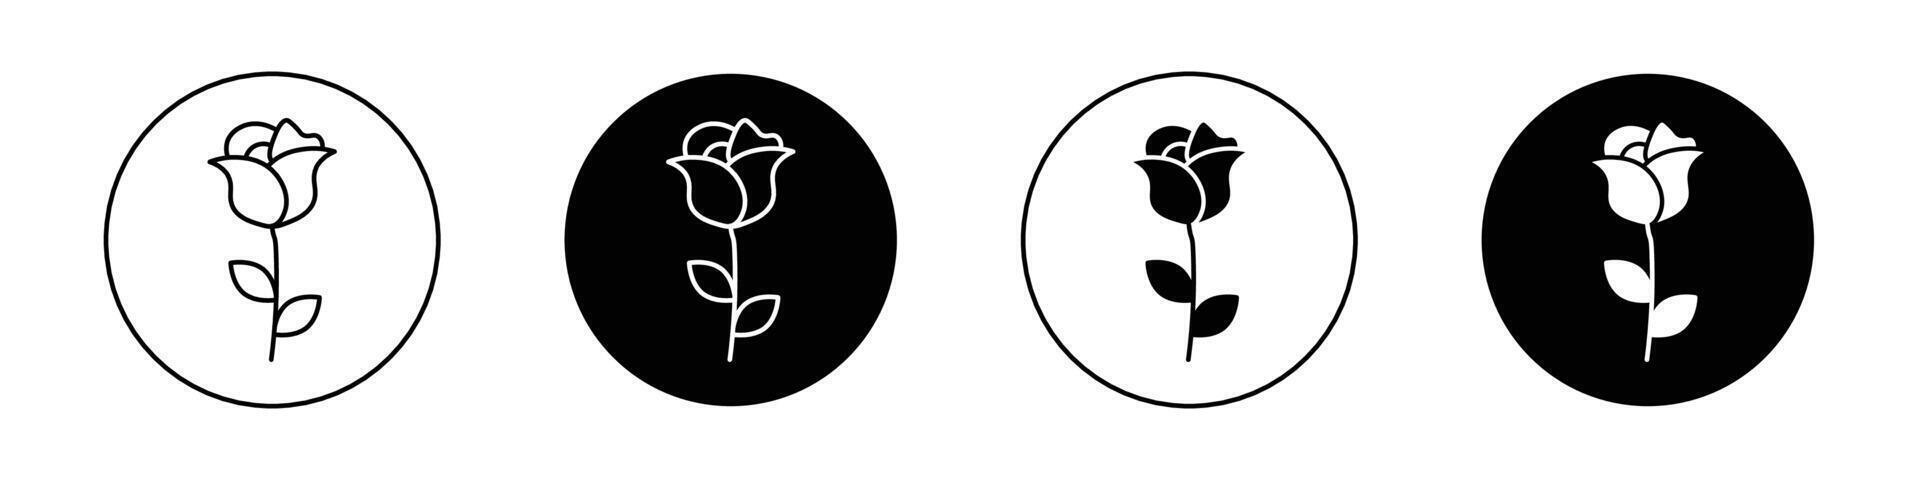 Rose flower icon vector